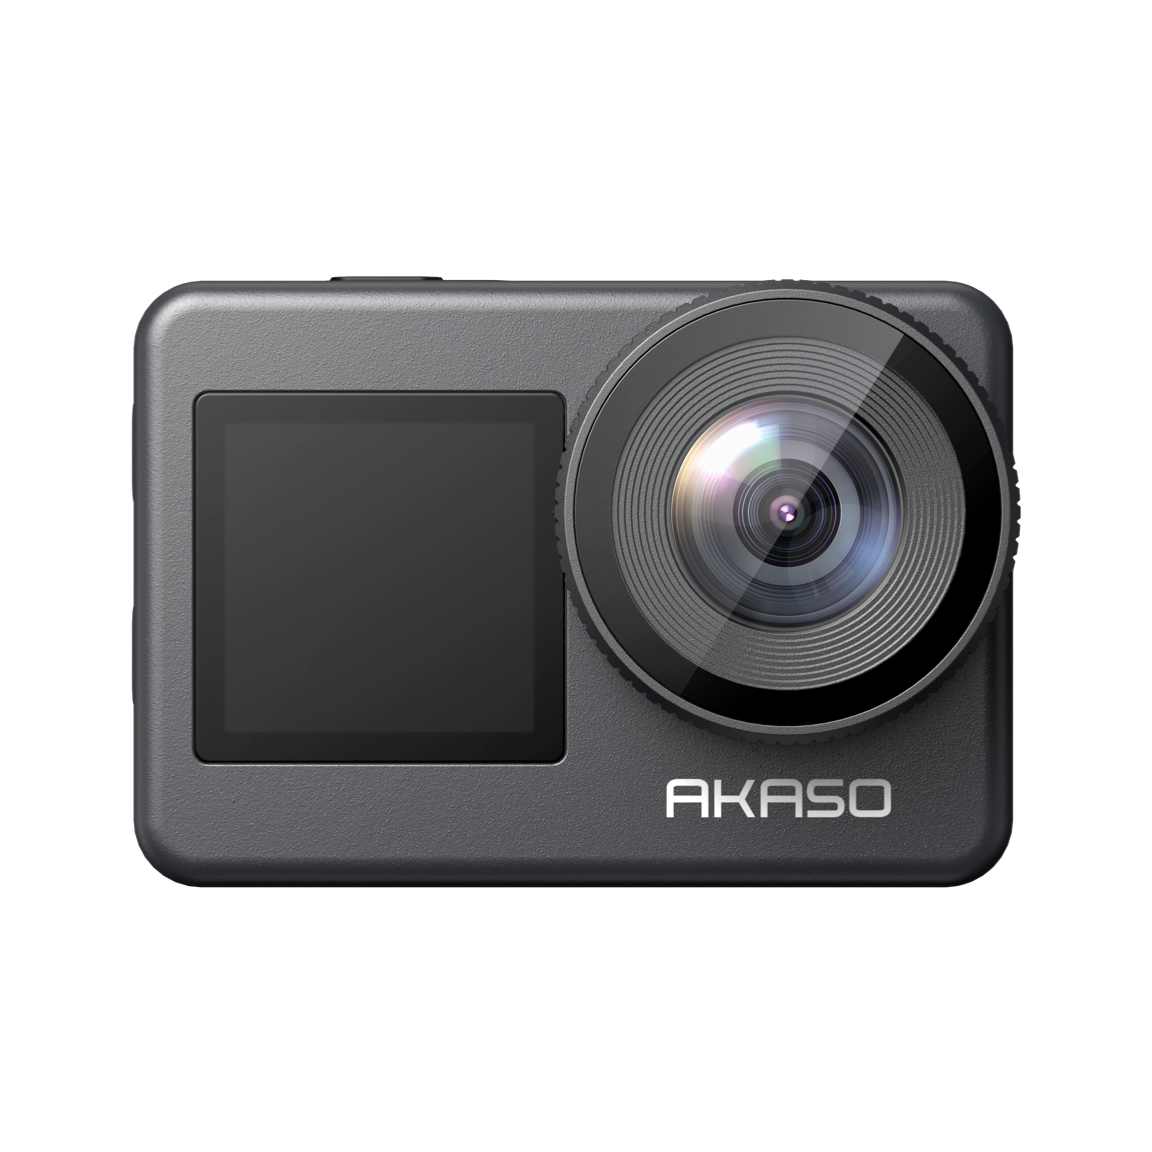  AKASO Brave 7/ Brave 8/ Brave 6 Plus External Microphone for AKASO  Brave 7/ Brave 8/ Brave 6 Plus Action Camera Only (Type-C Port) :  Electronics